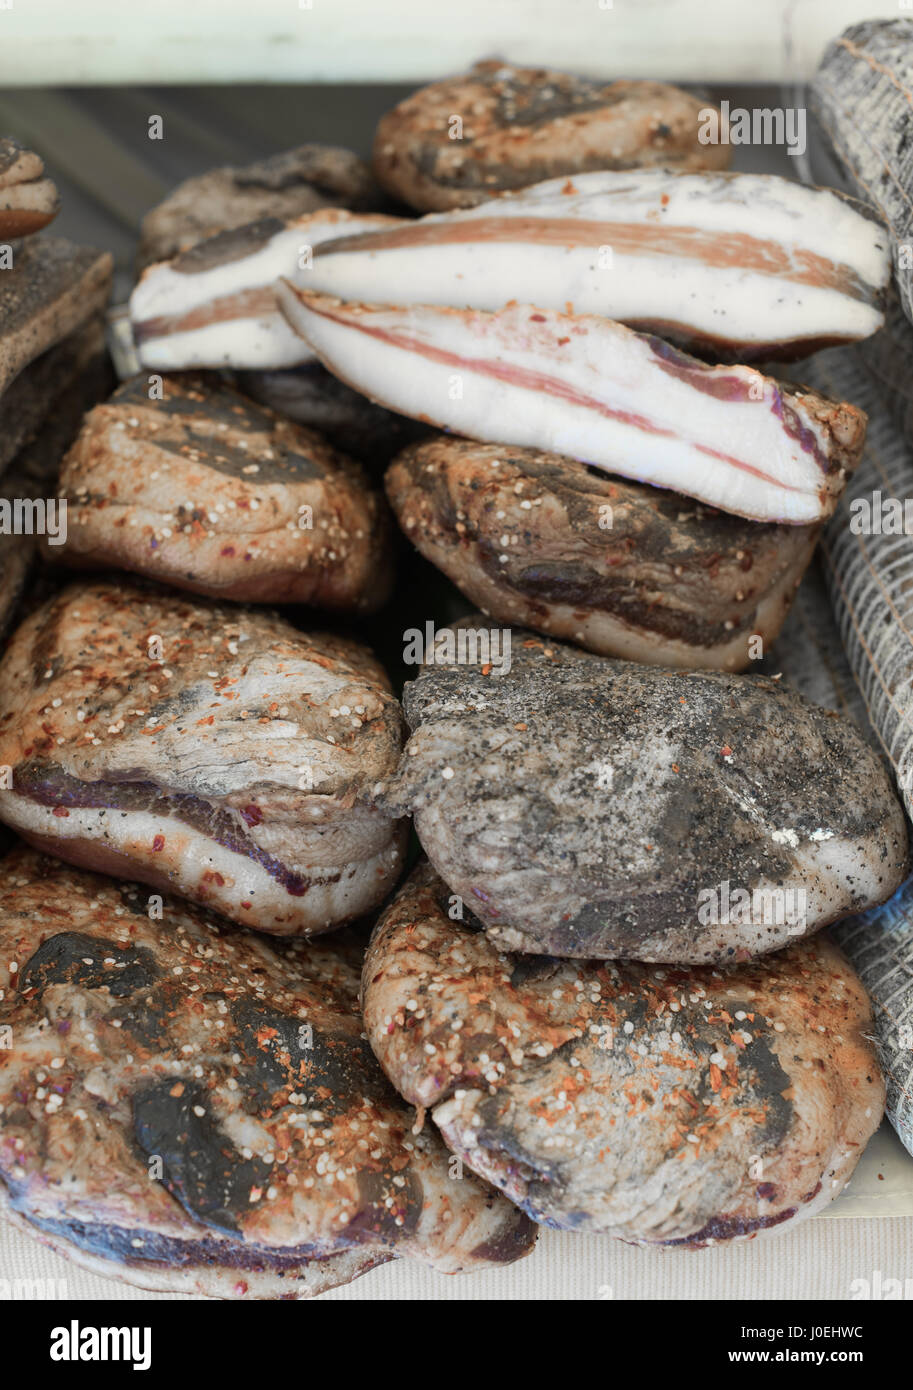 Bacon and cheek lard whole and sliced heap on market shelf Stock Photo